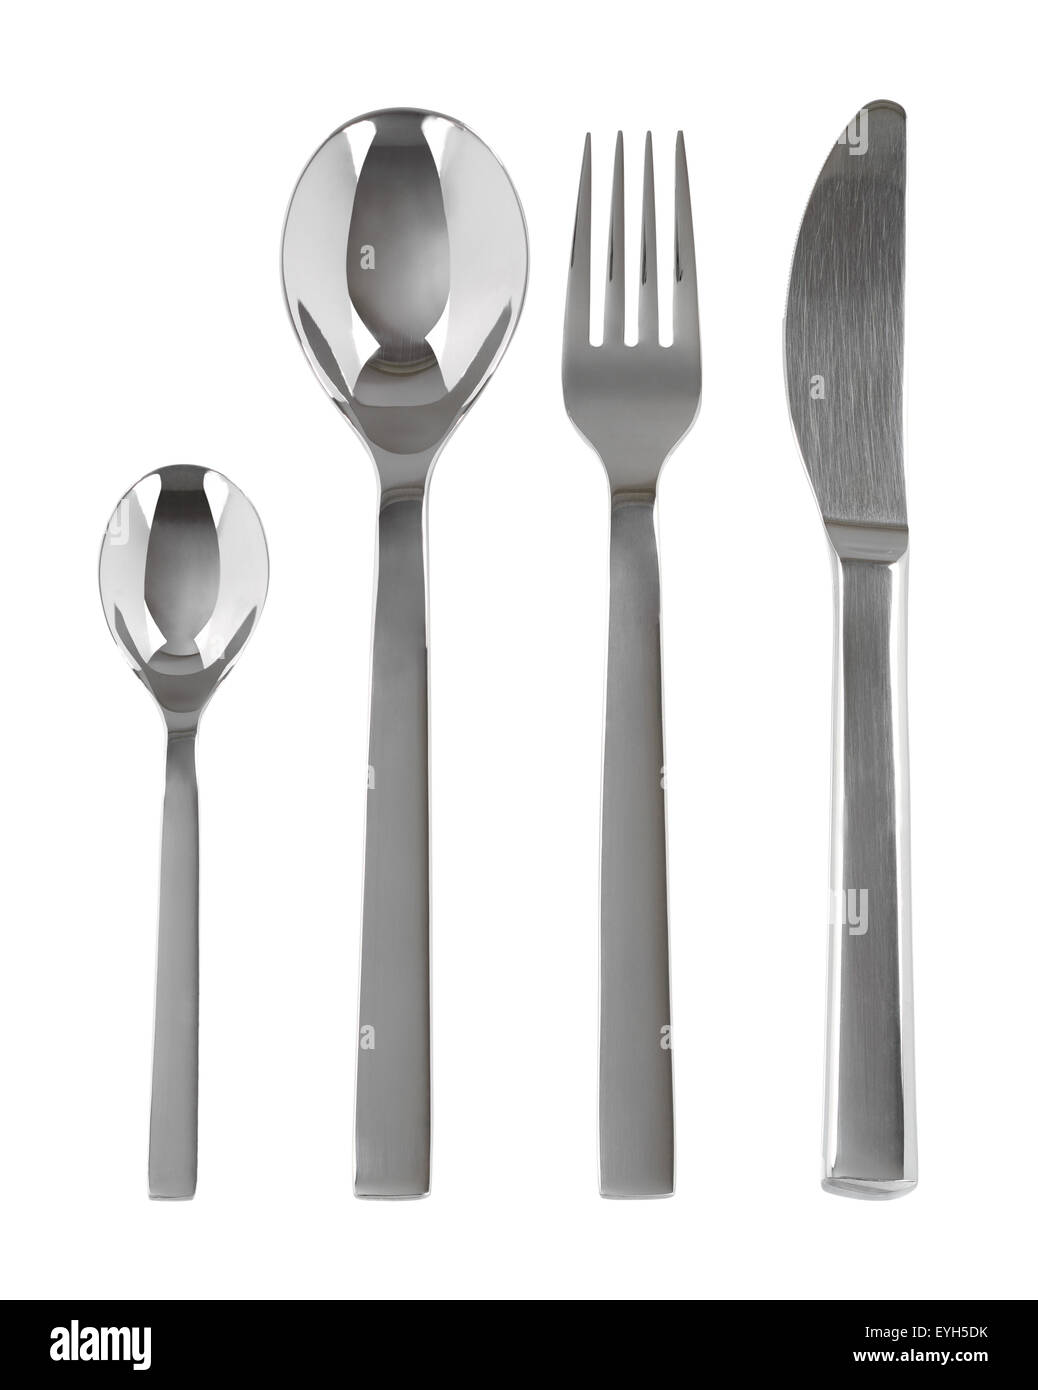 Knife fork spoon silverware cutlery table setting Stock Photo